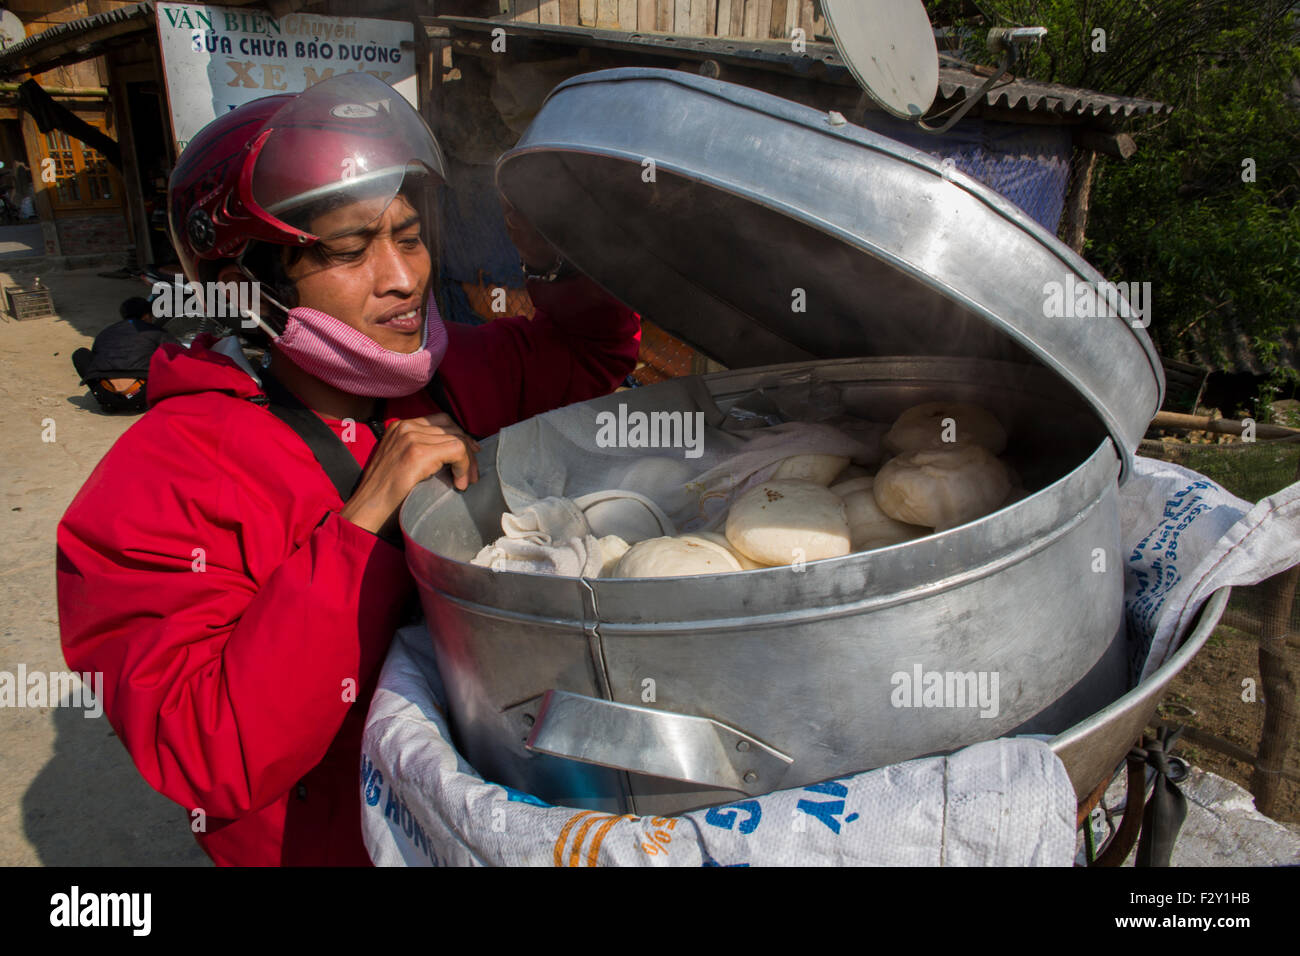 Vietnamese man selling dumplings Stock Photo